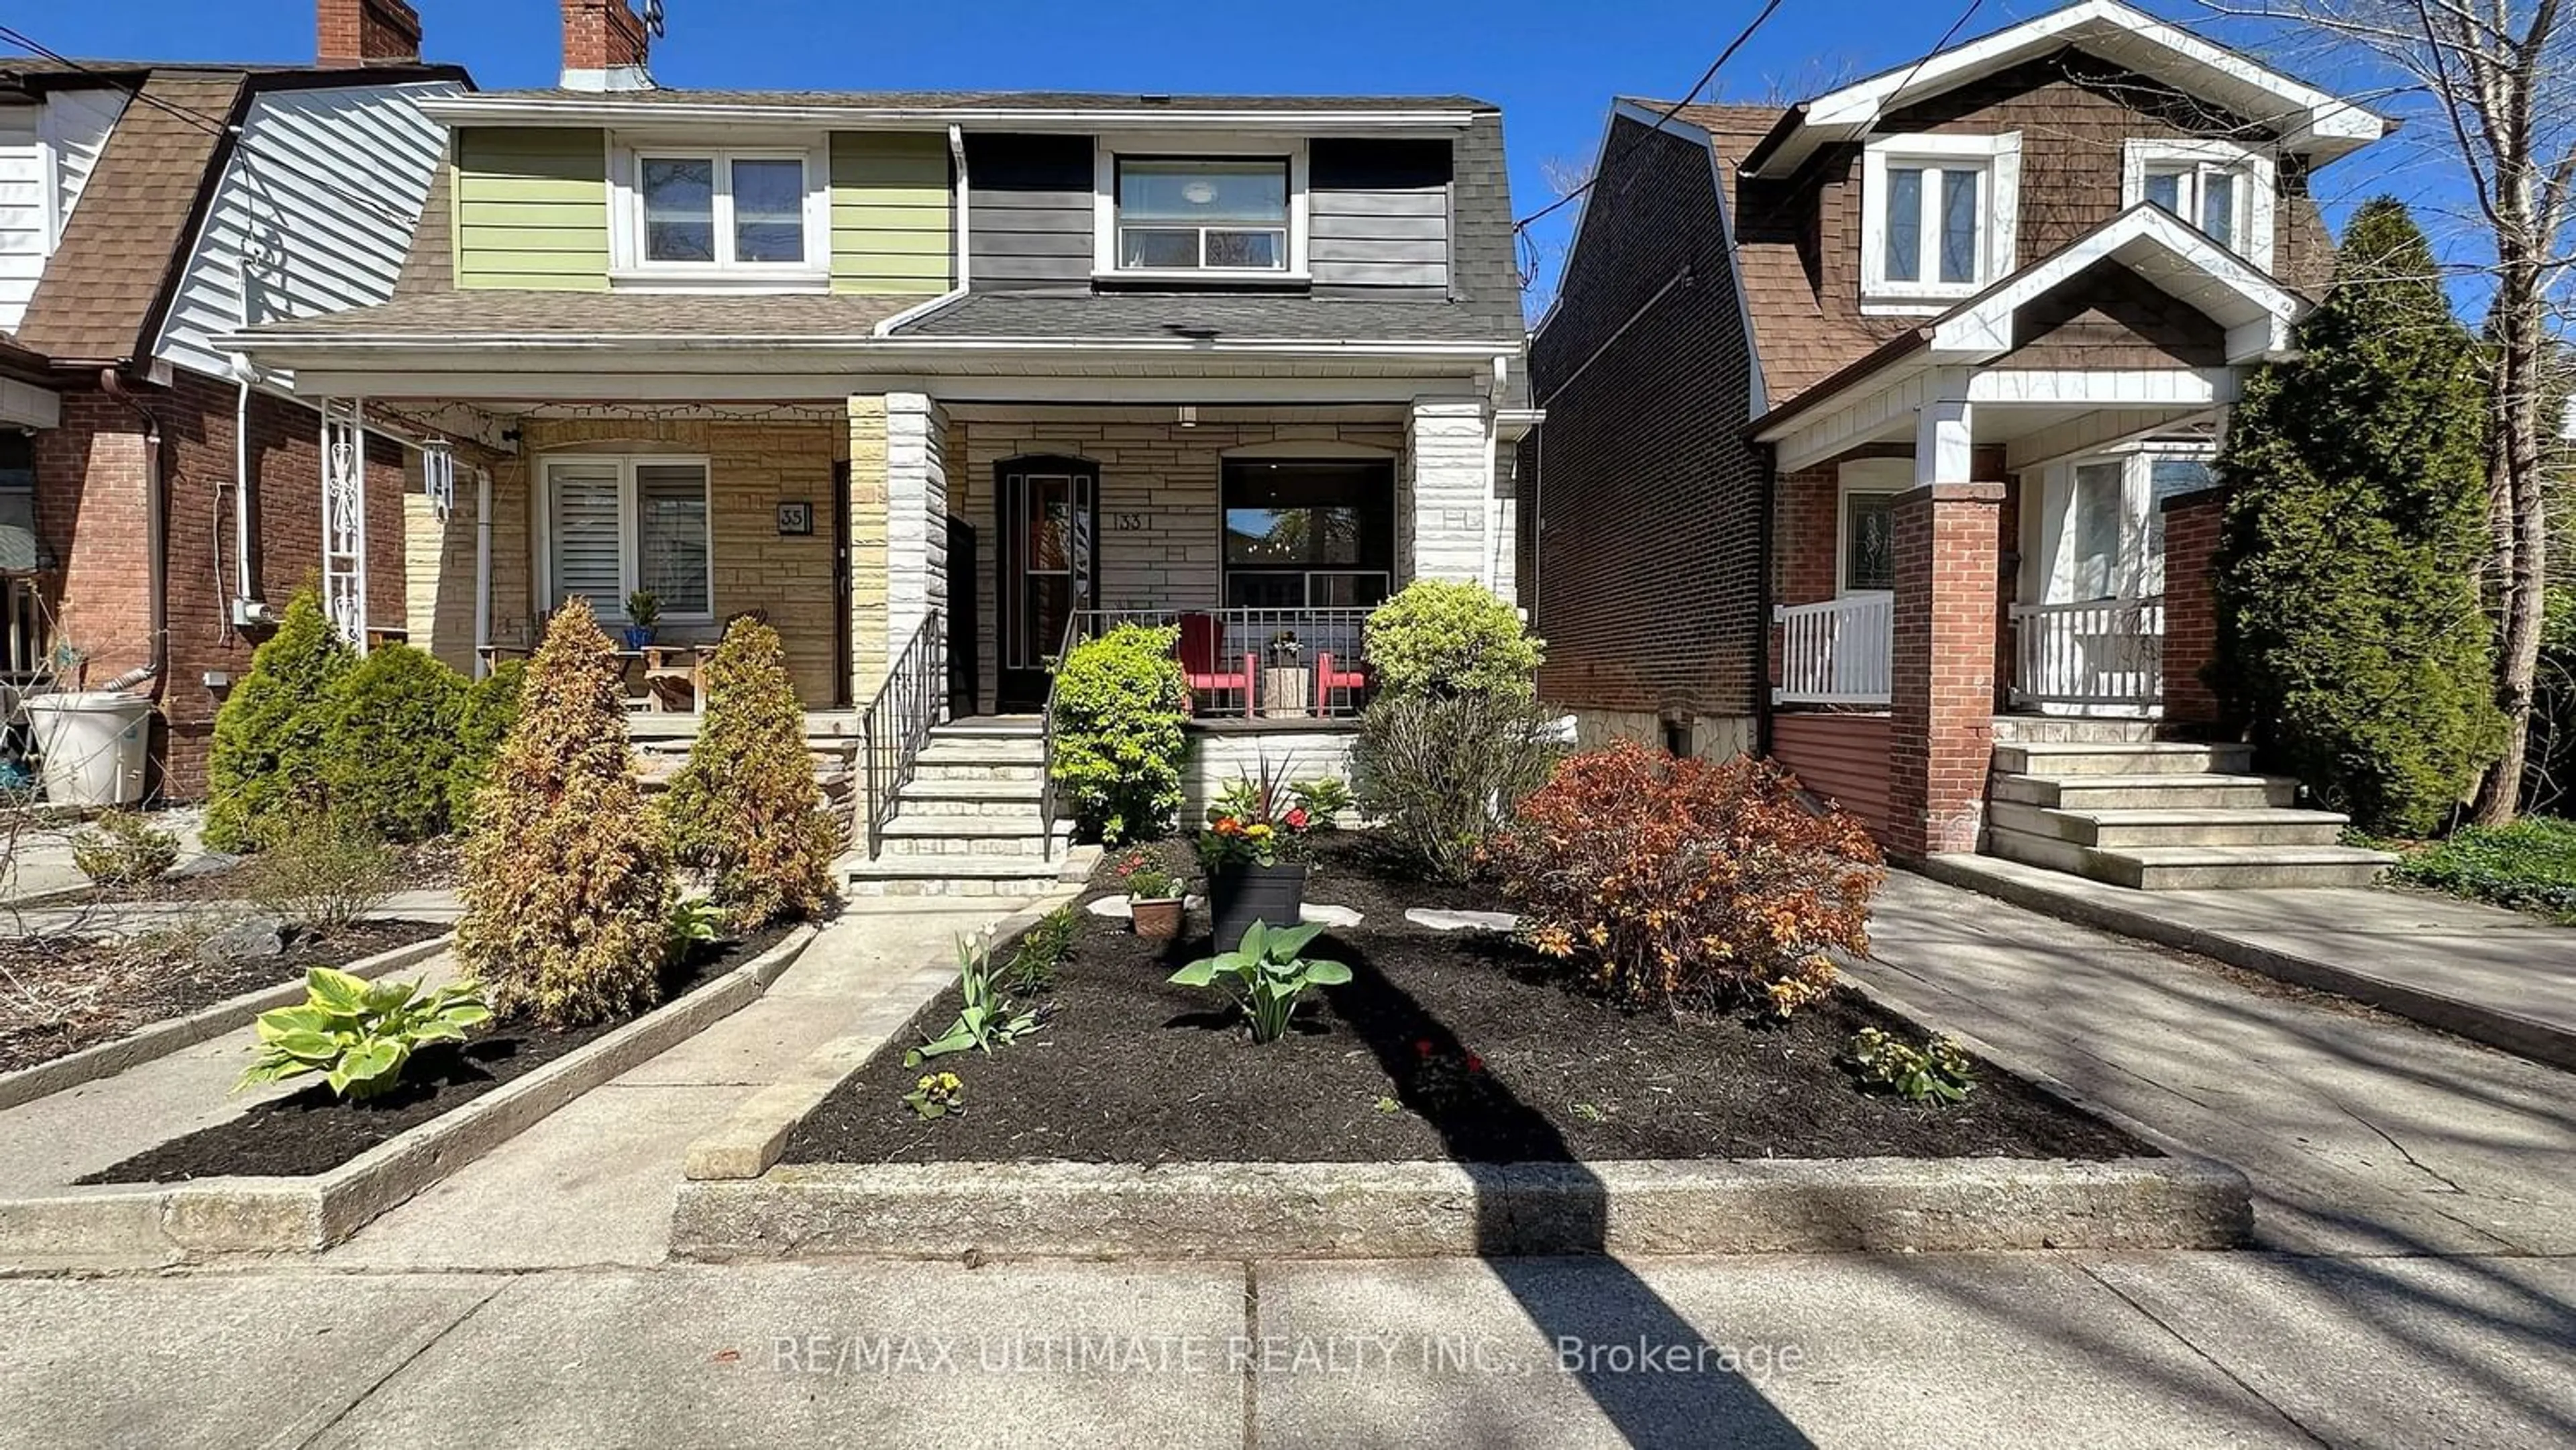 Home with brick exterior material for 33 Glebemount Ave, Toronto Ontario M4C 3R5